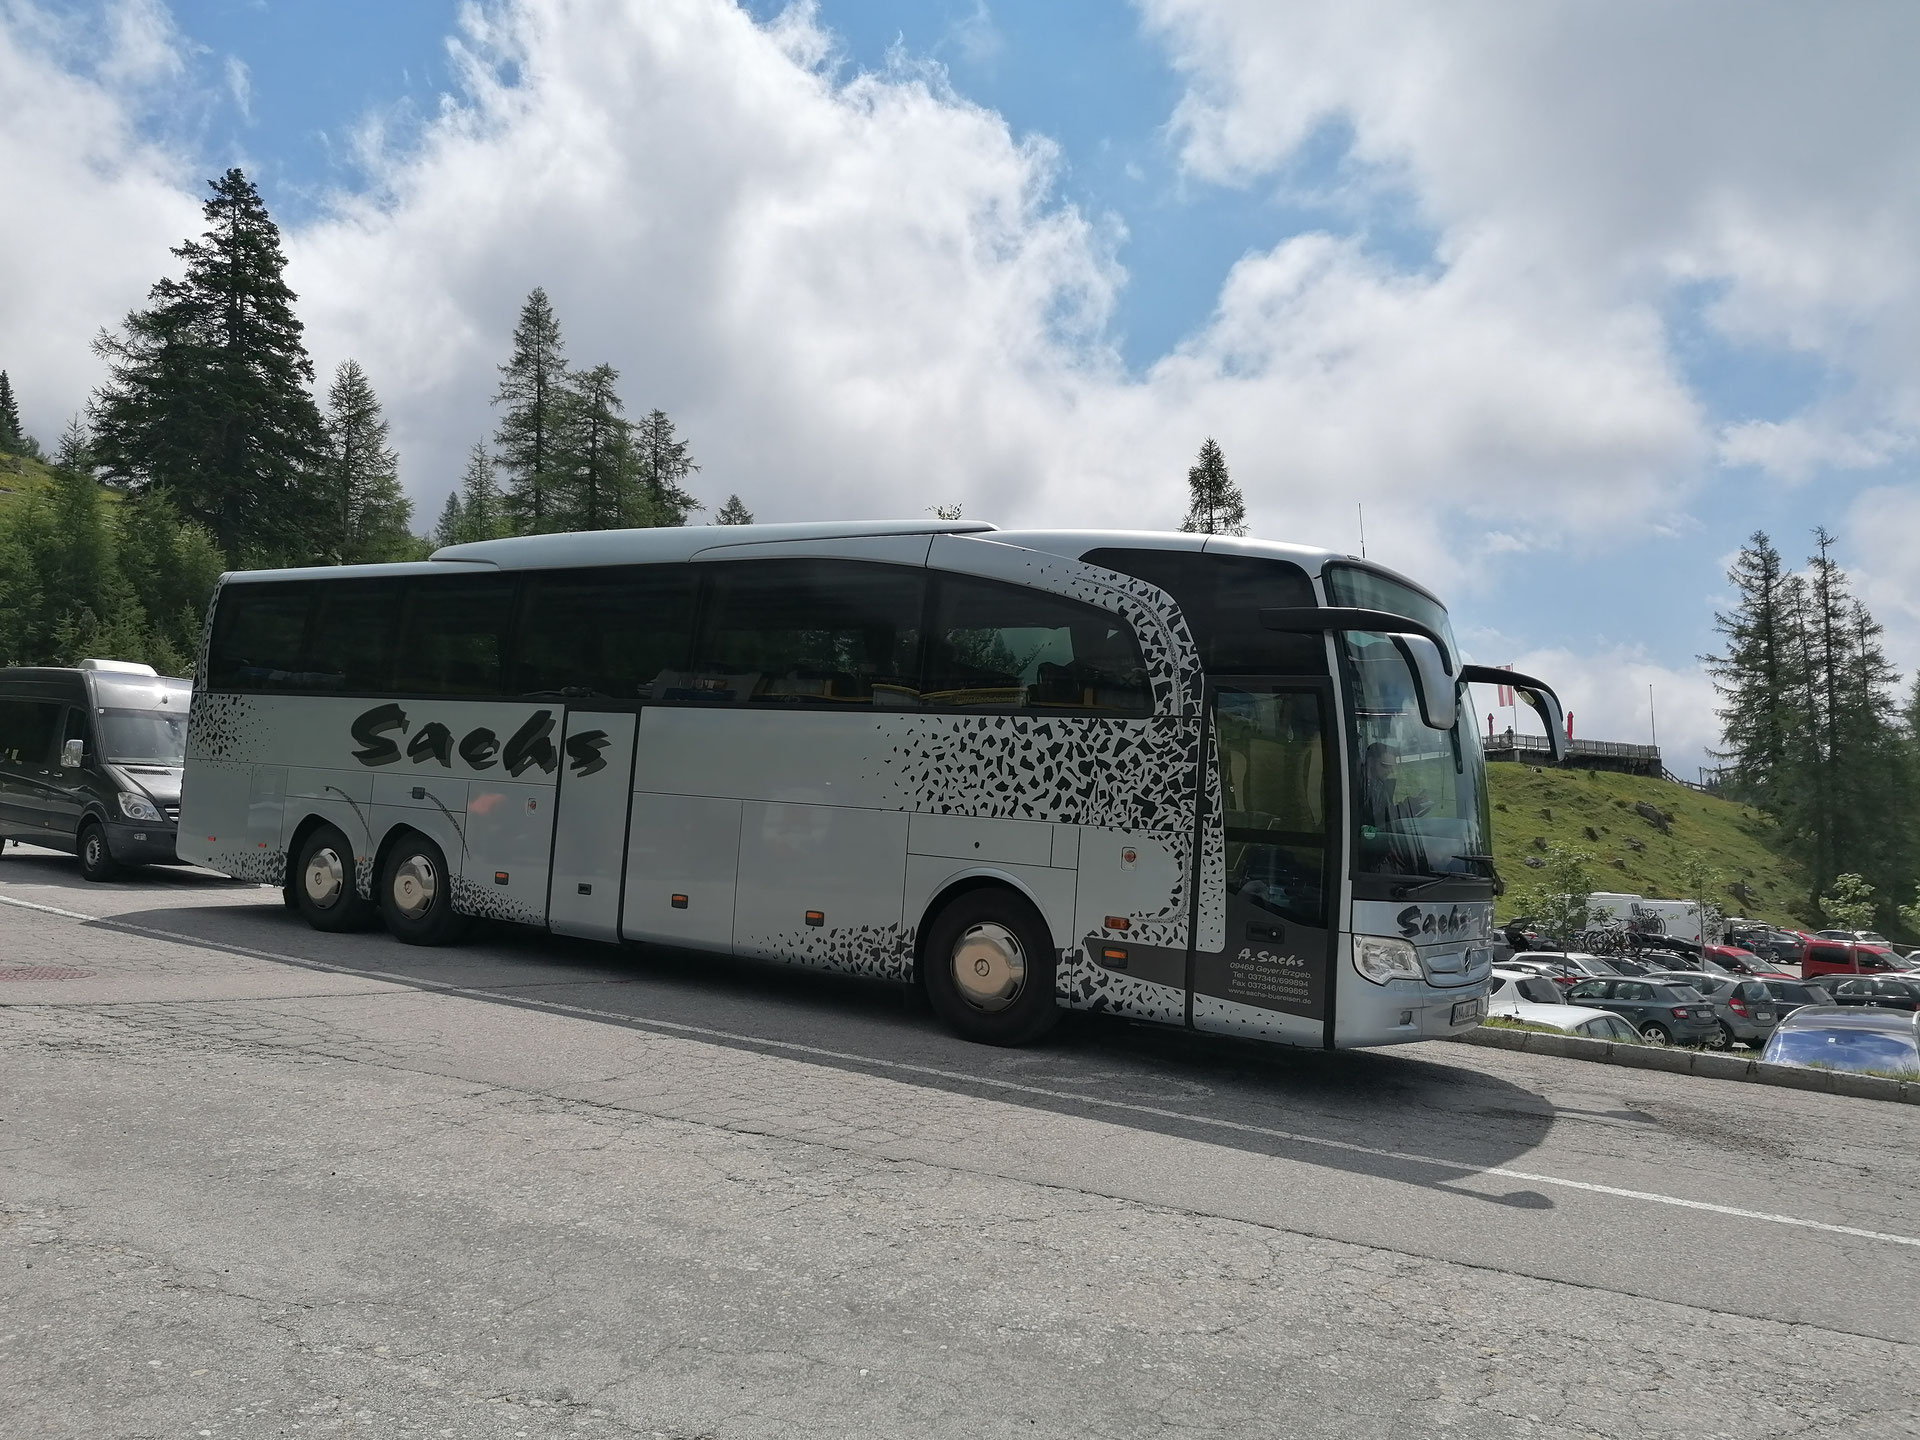 (c) Sachs-busreisen.de